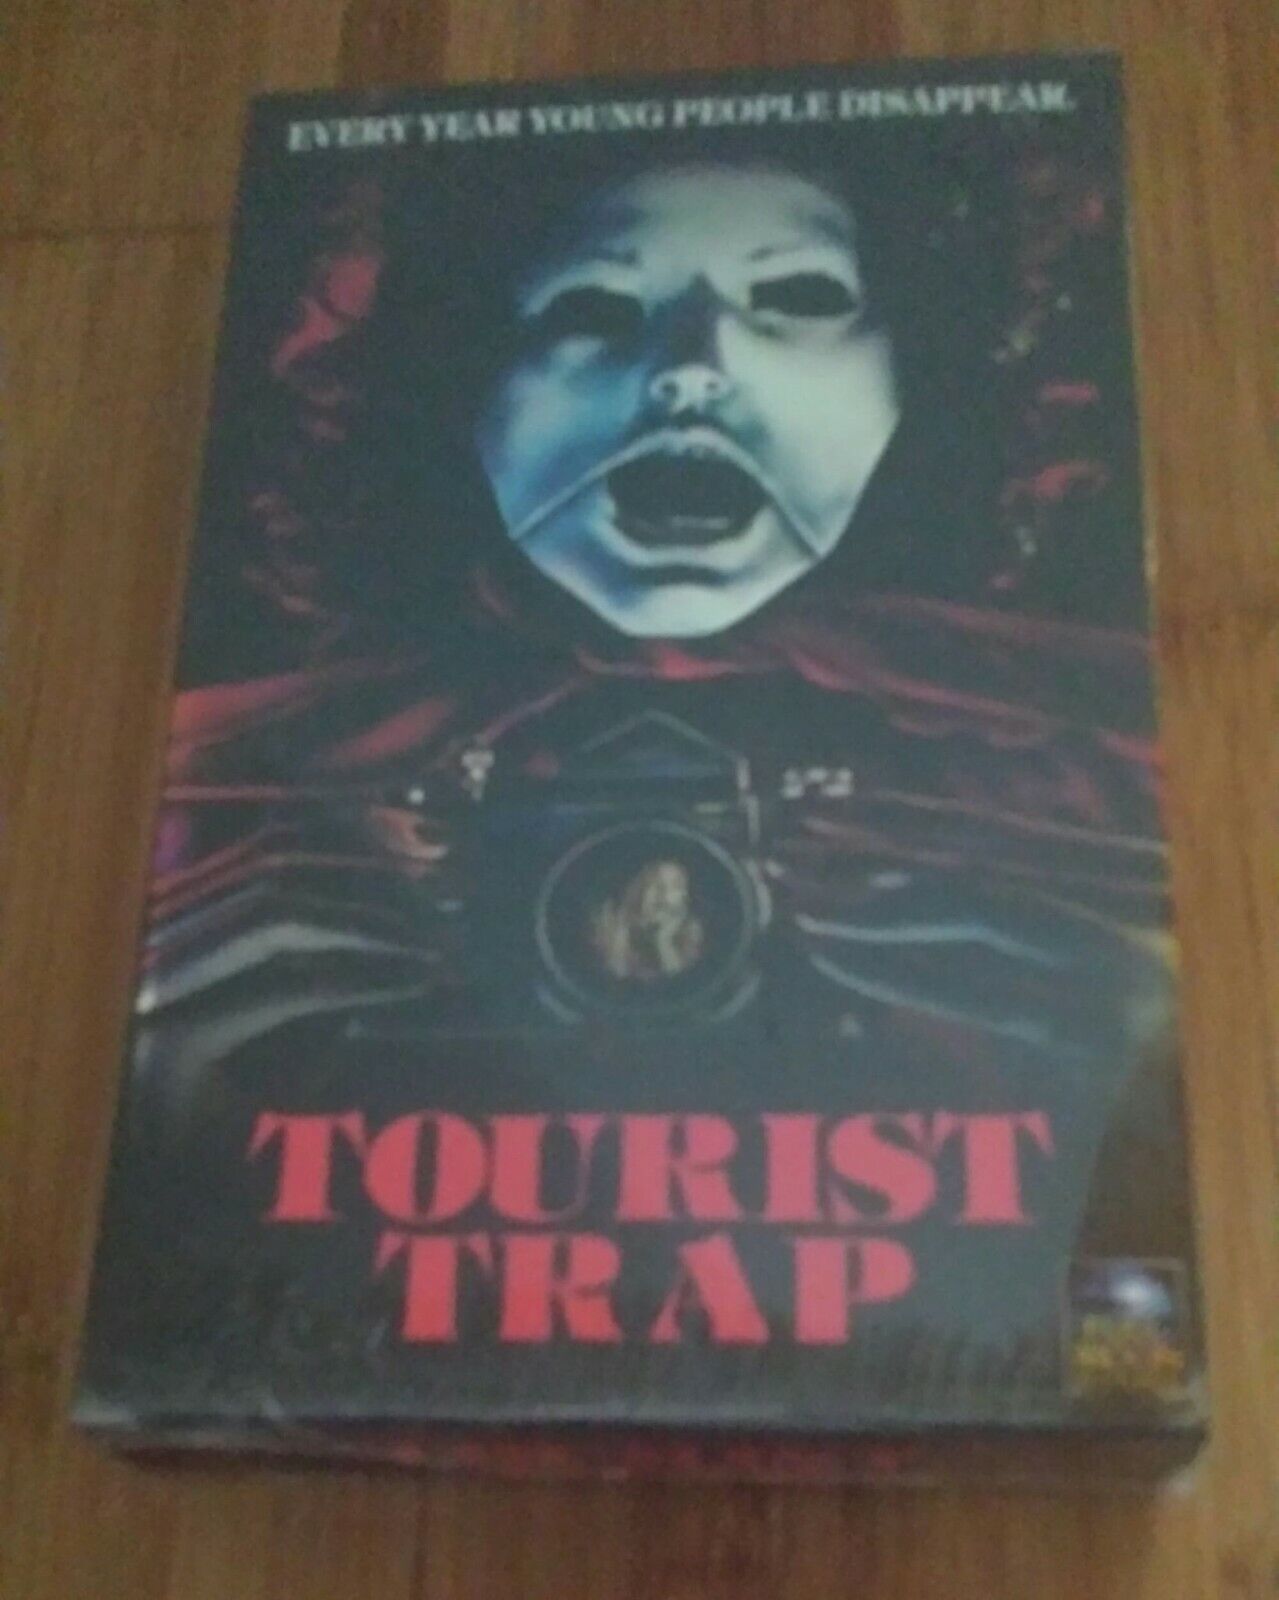 Tourist Trap 